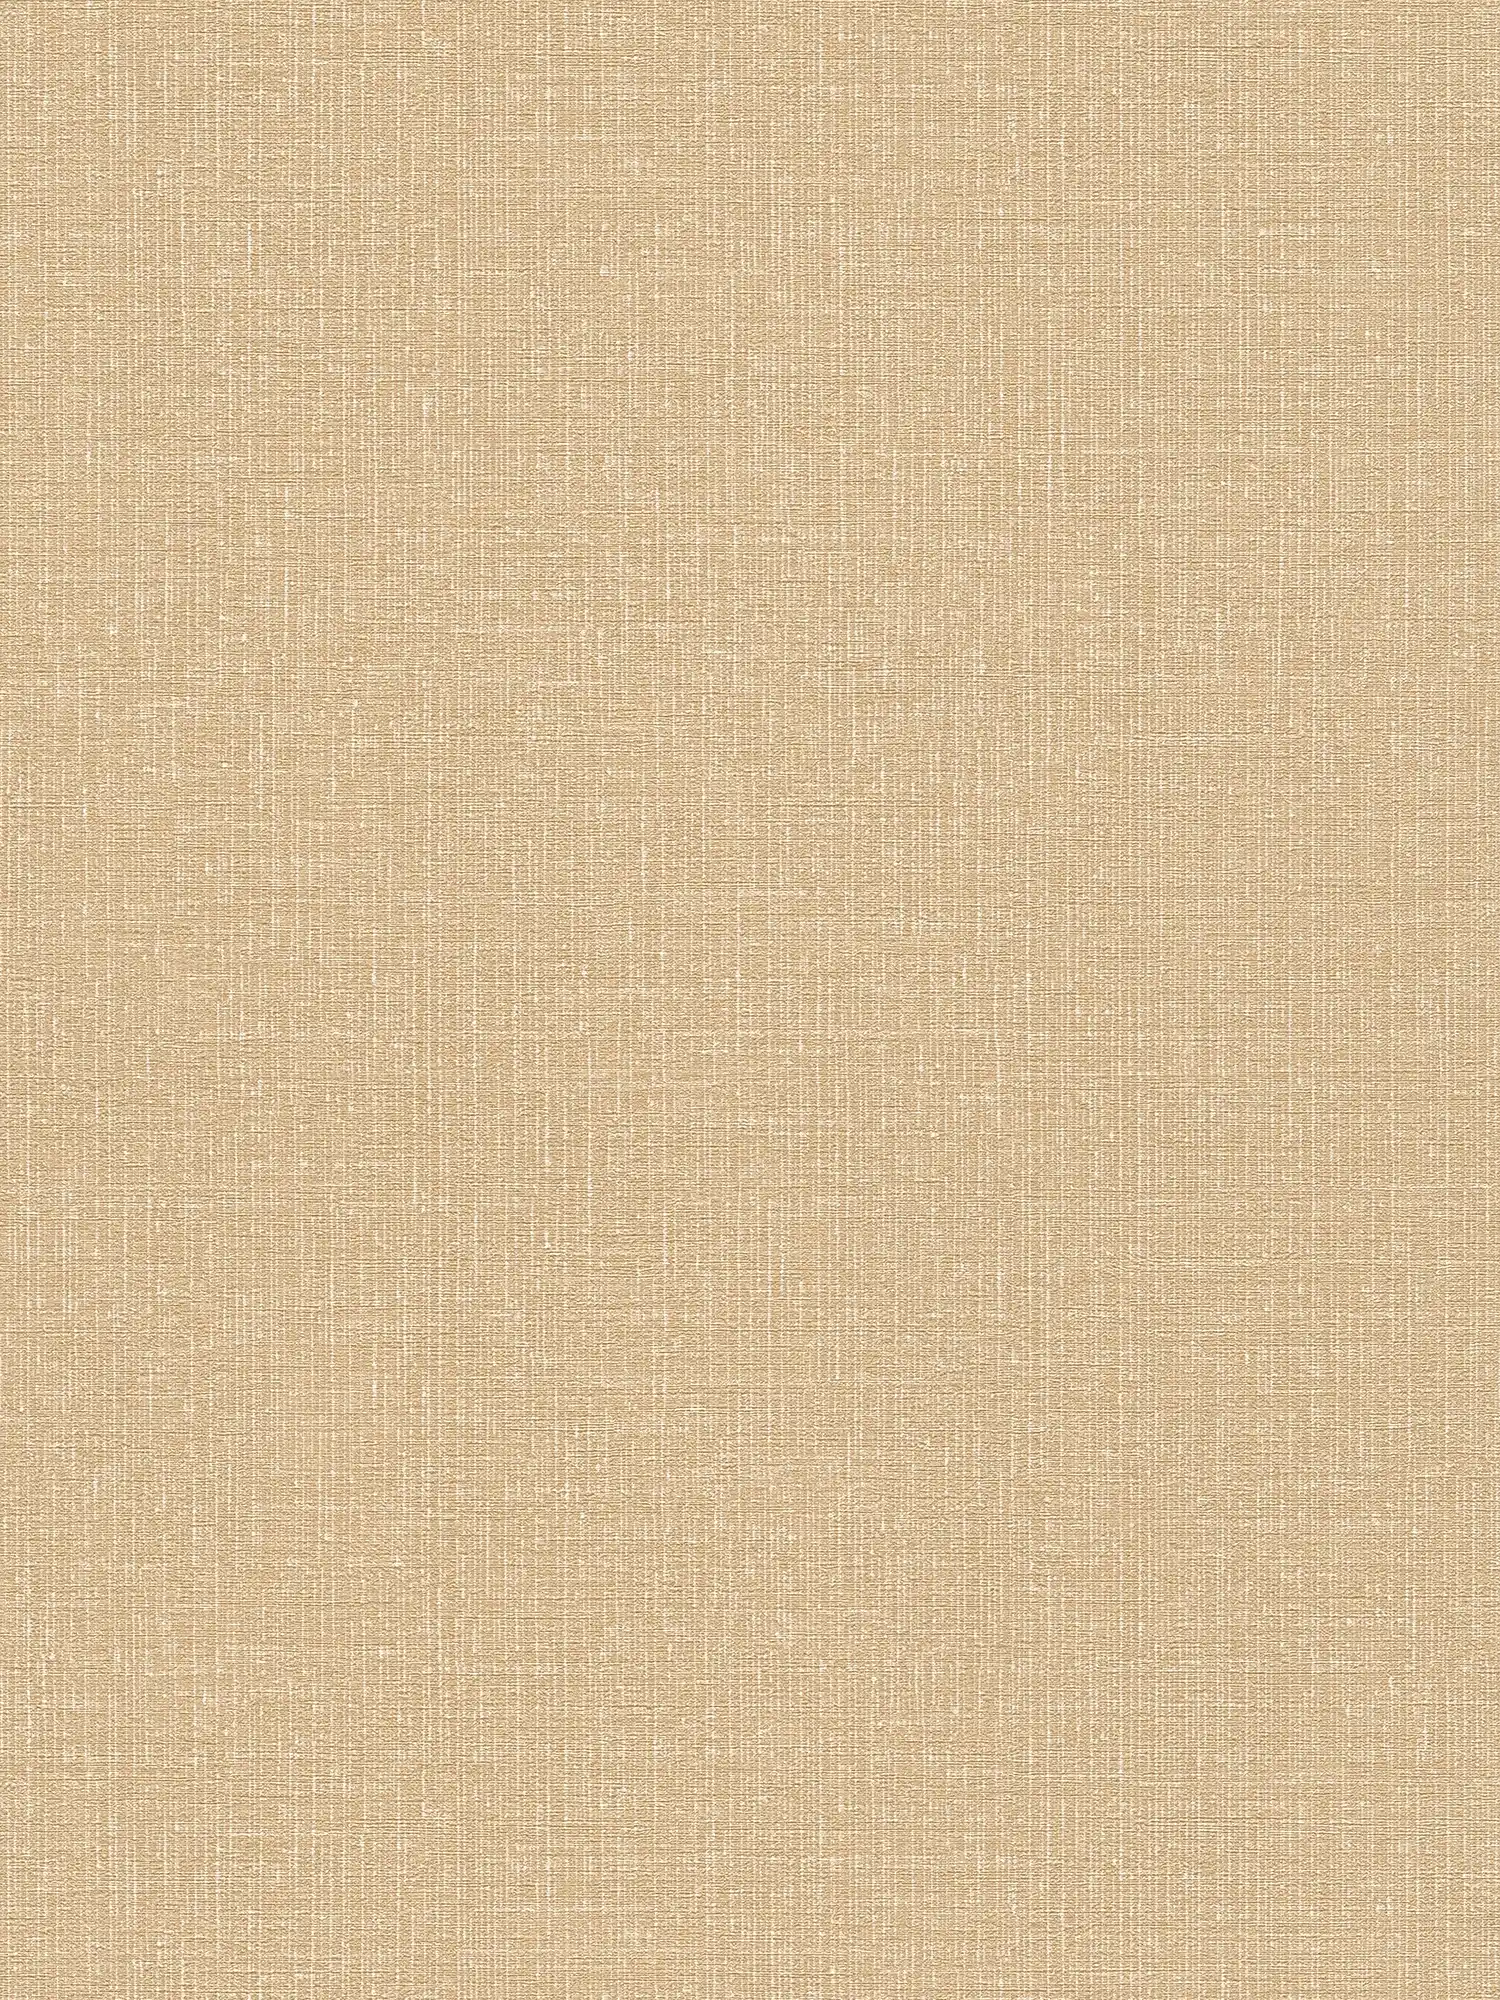 Linen optics wallpaper non-woven beige-gold with texture effect - beige, metallic
